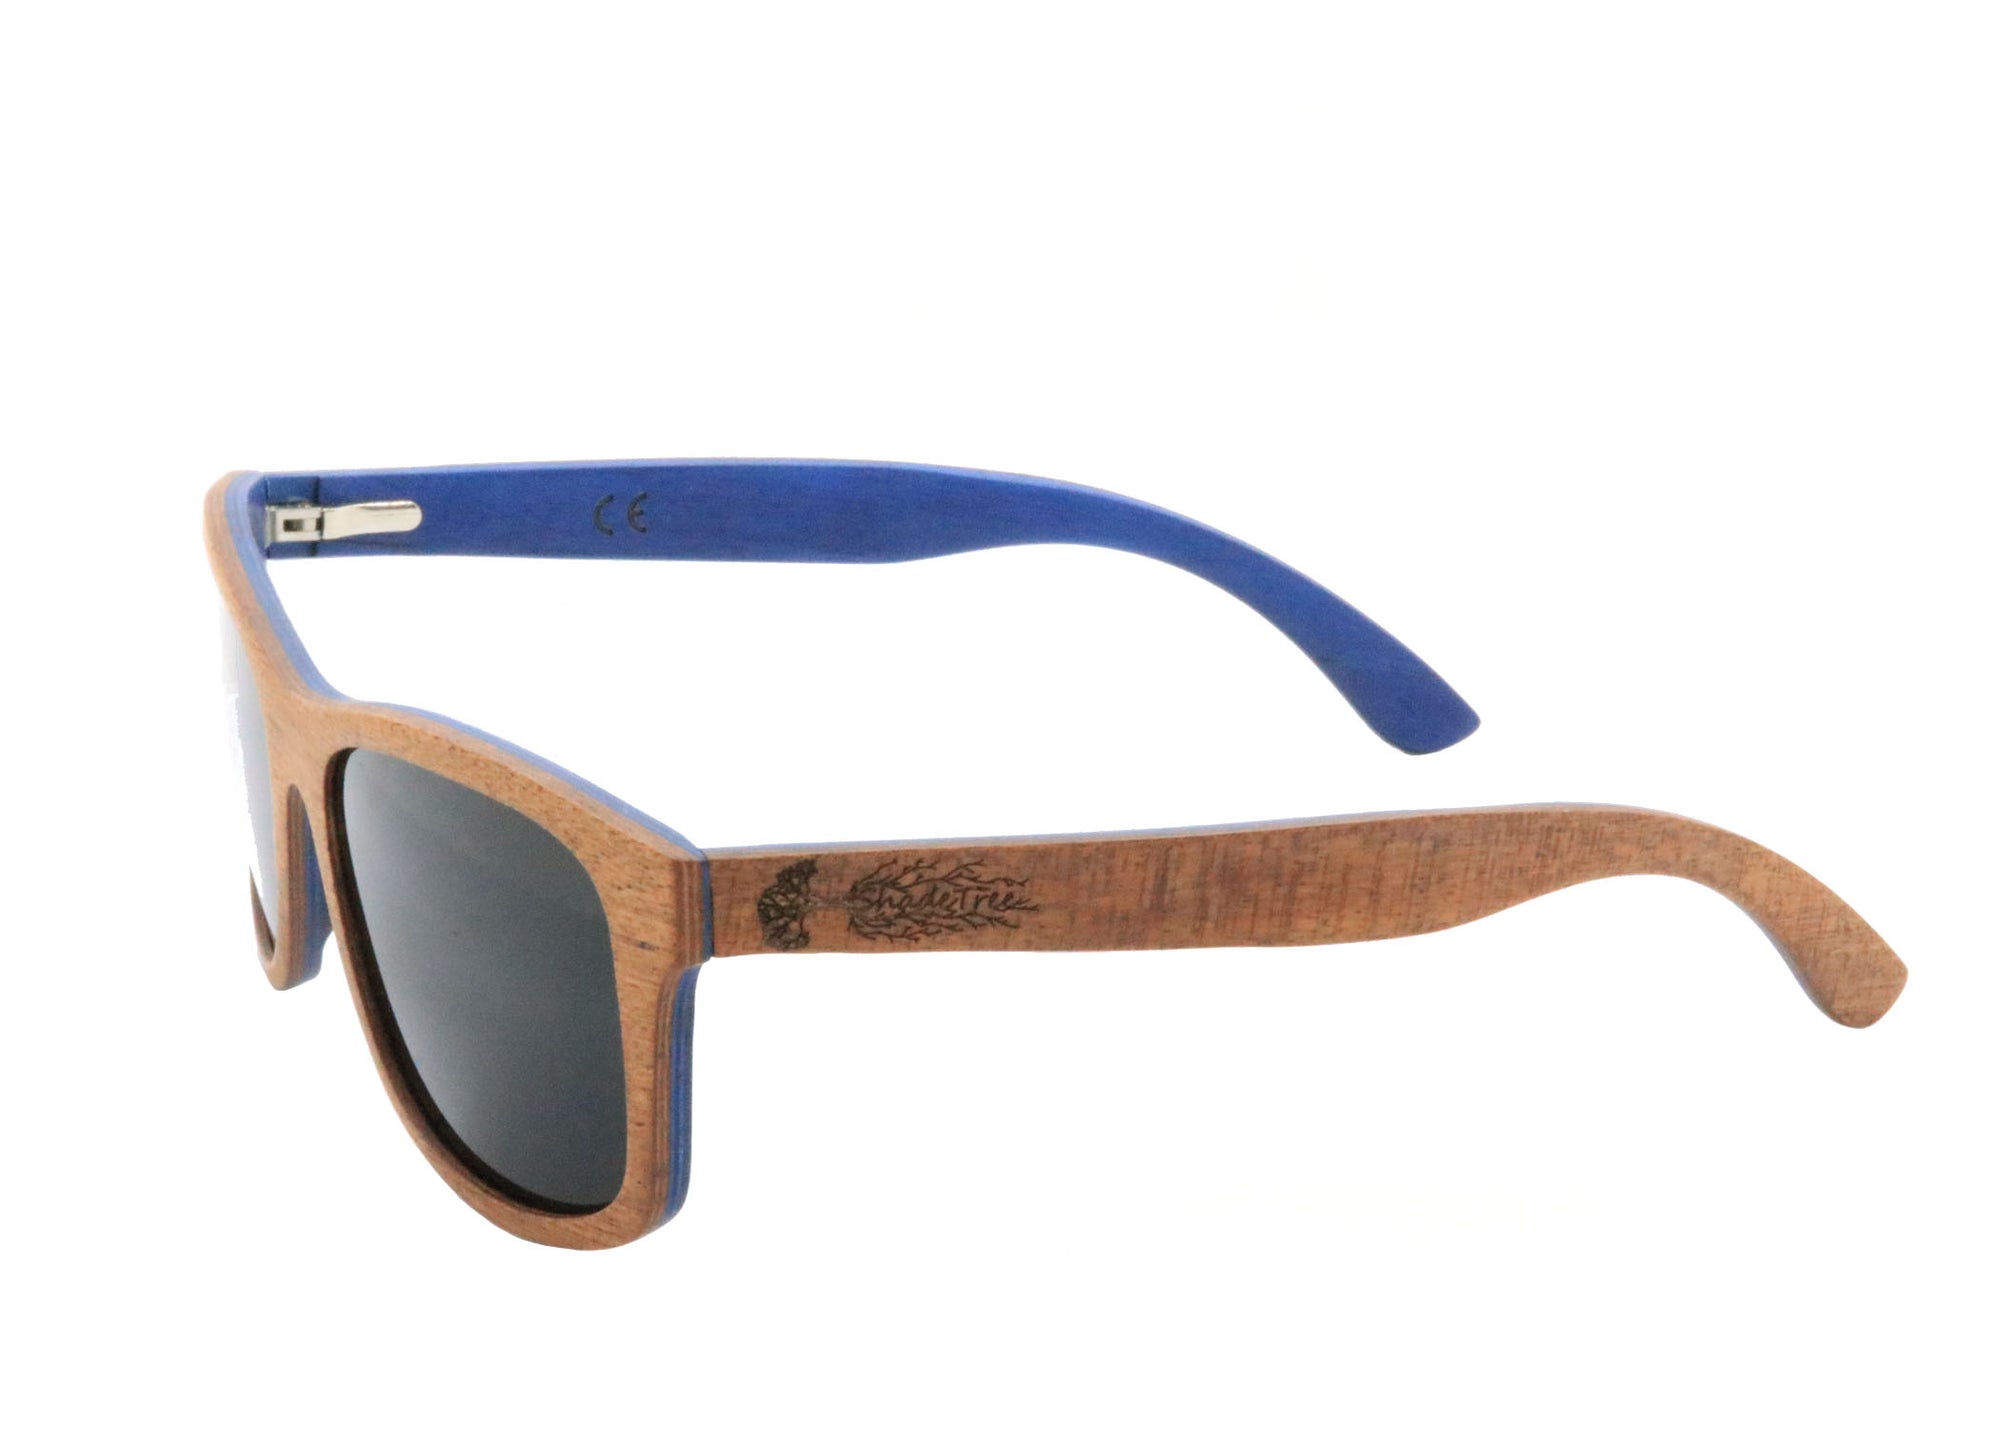 Buffalo Inspired Polarized Sunglasses 2.0 added More Blue Color